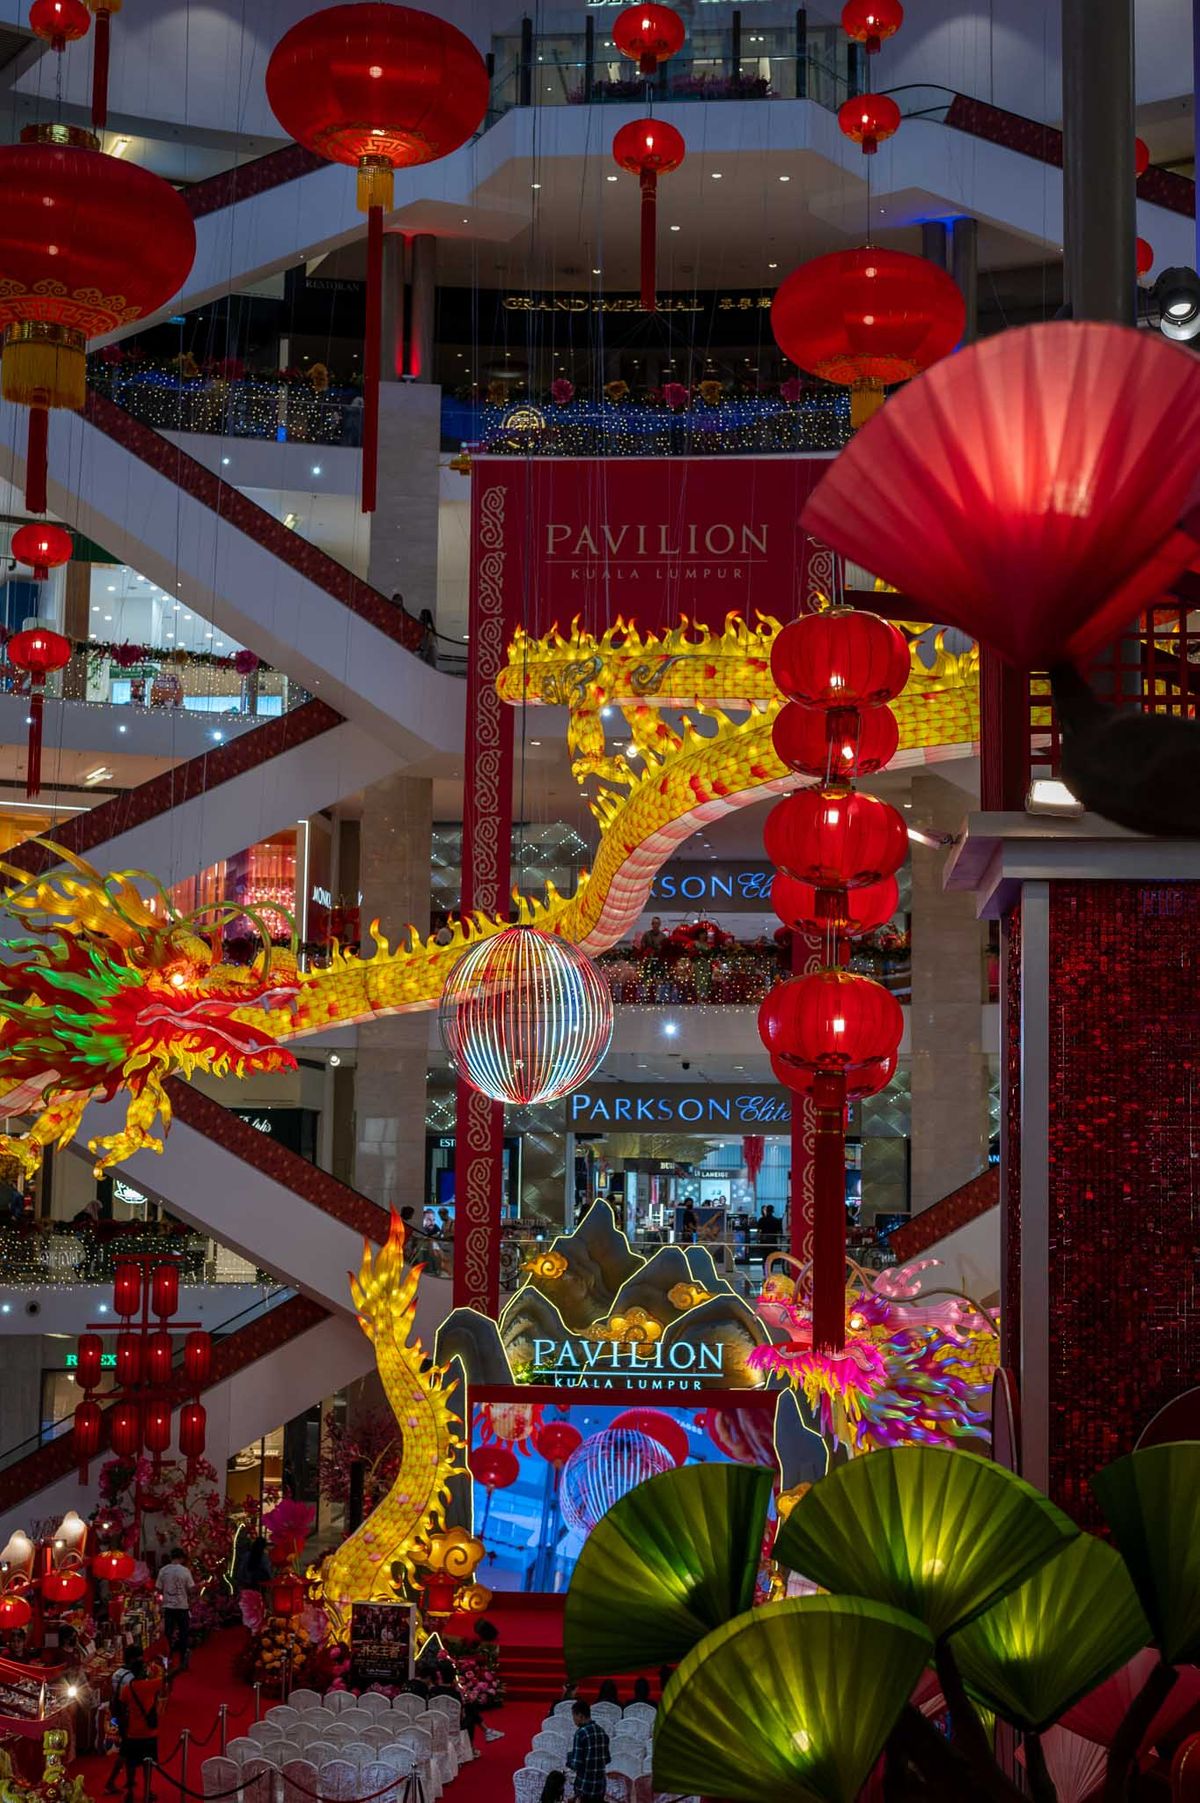 Pavilion kurz vor Chinese New Year